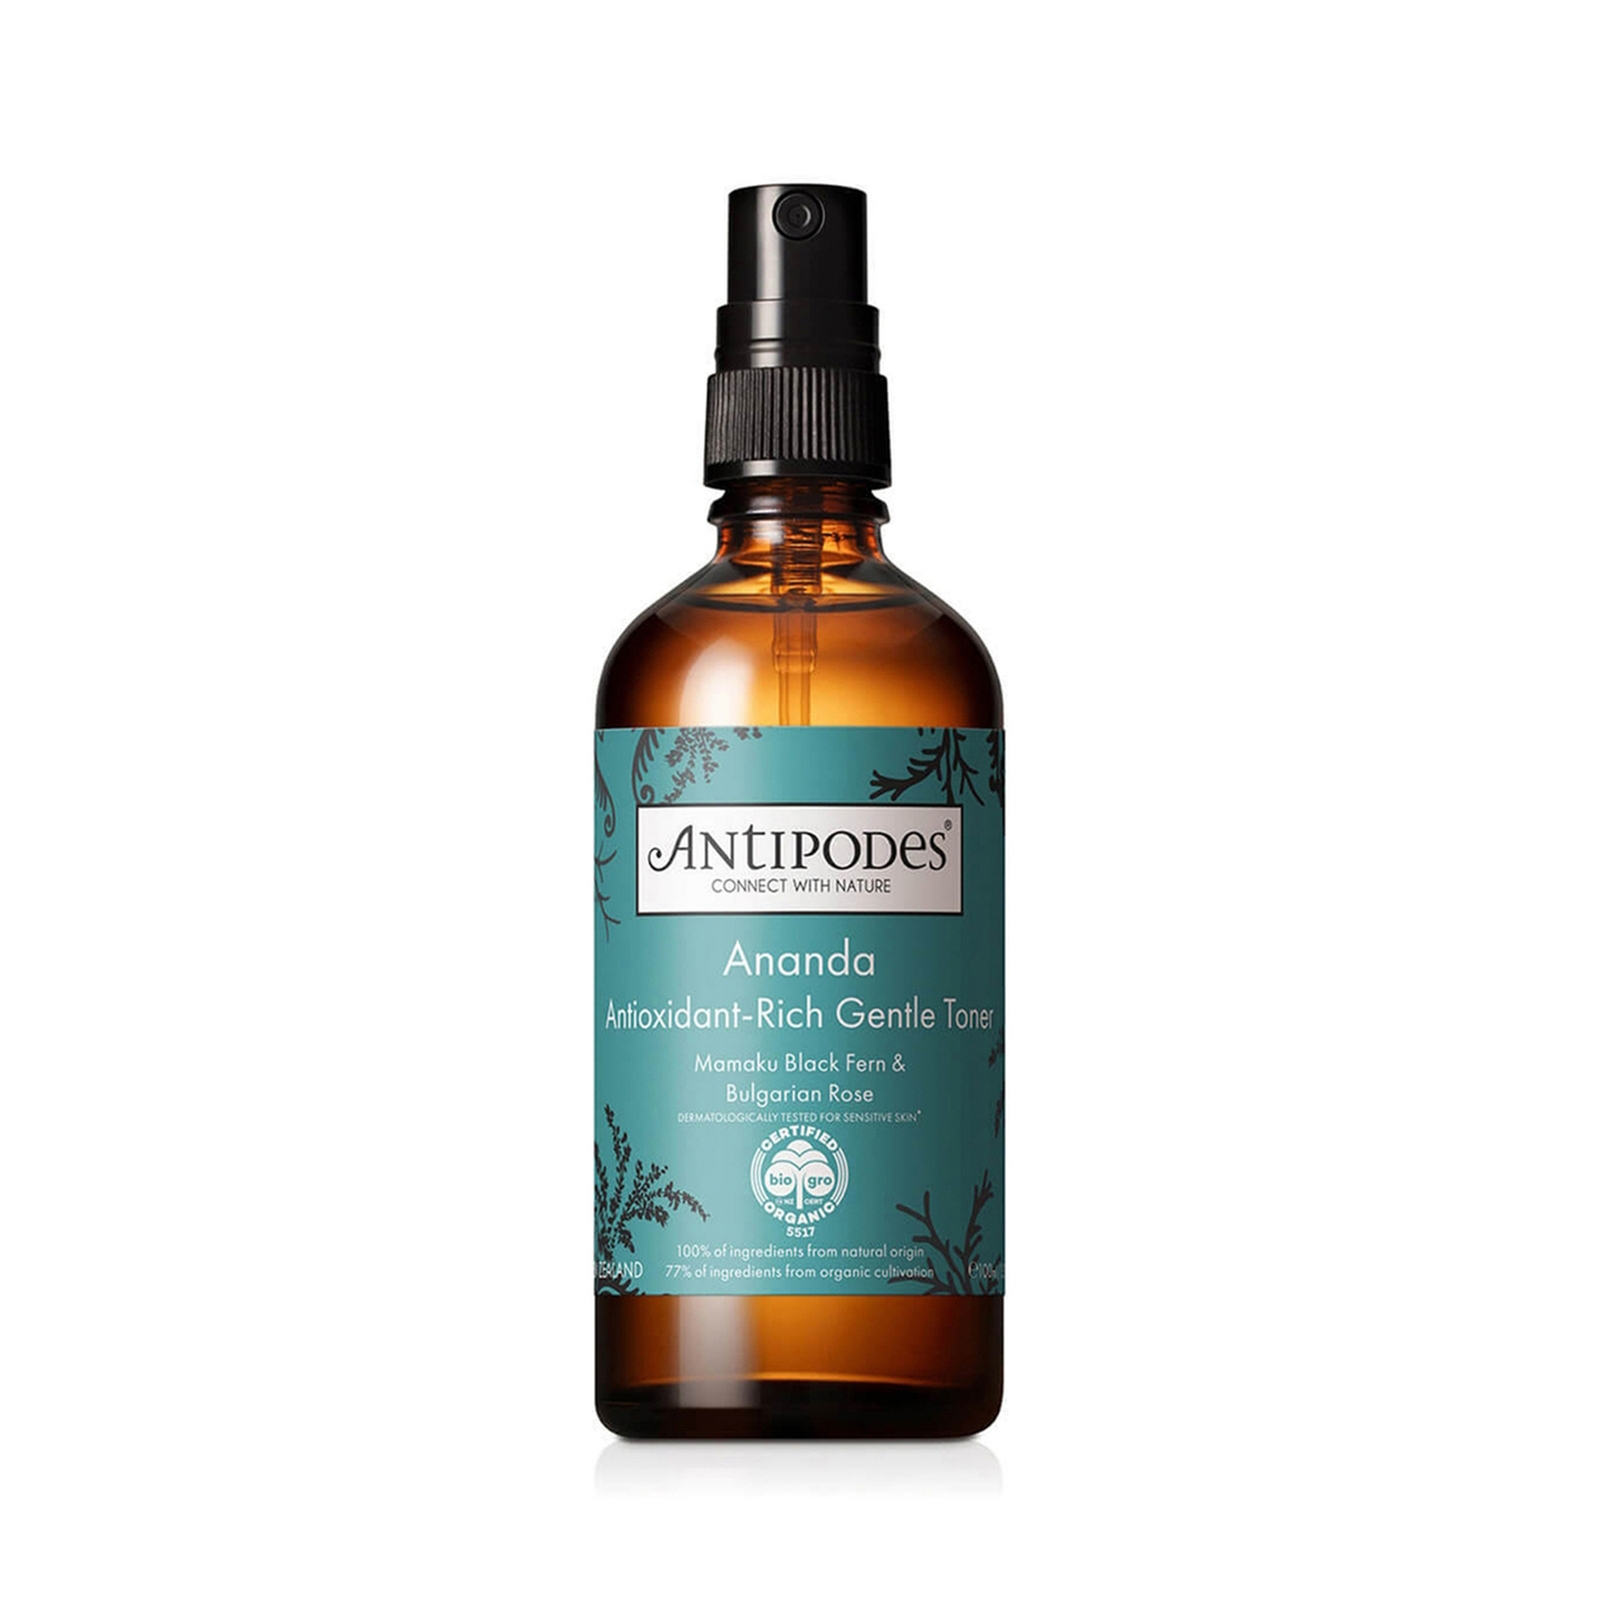 Ananda Antioxidant-Rich Gentle Toner 100ml